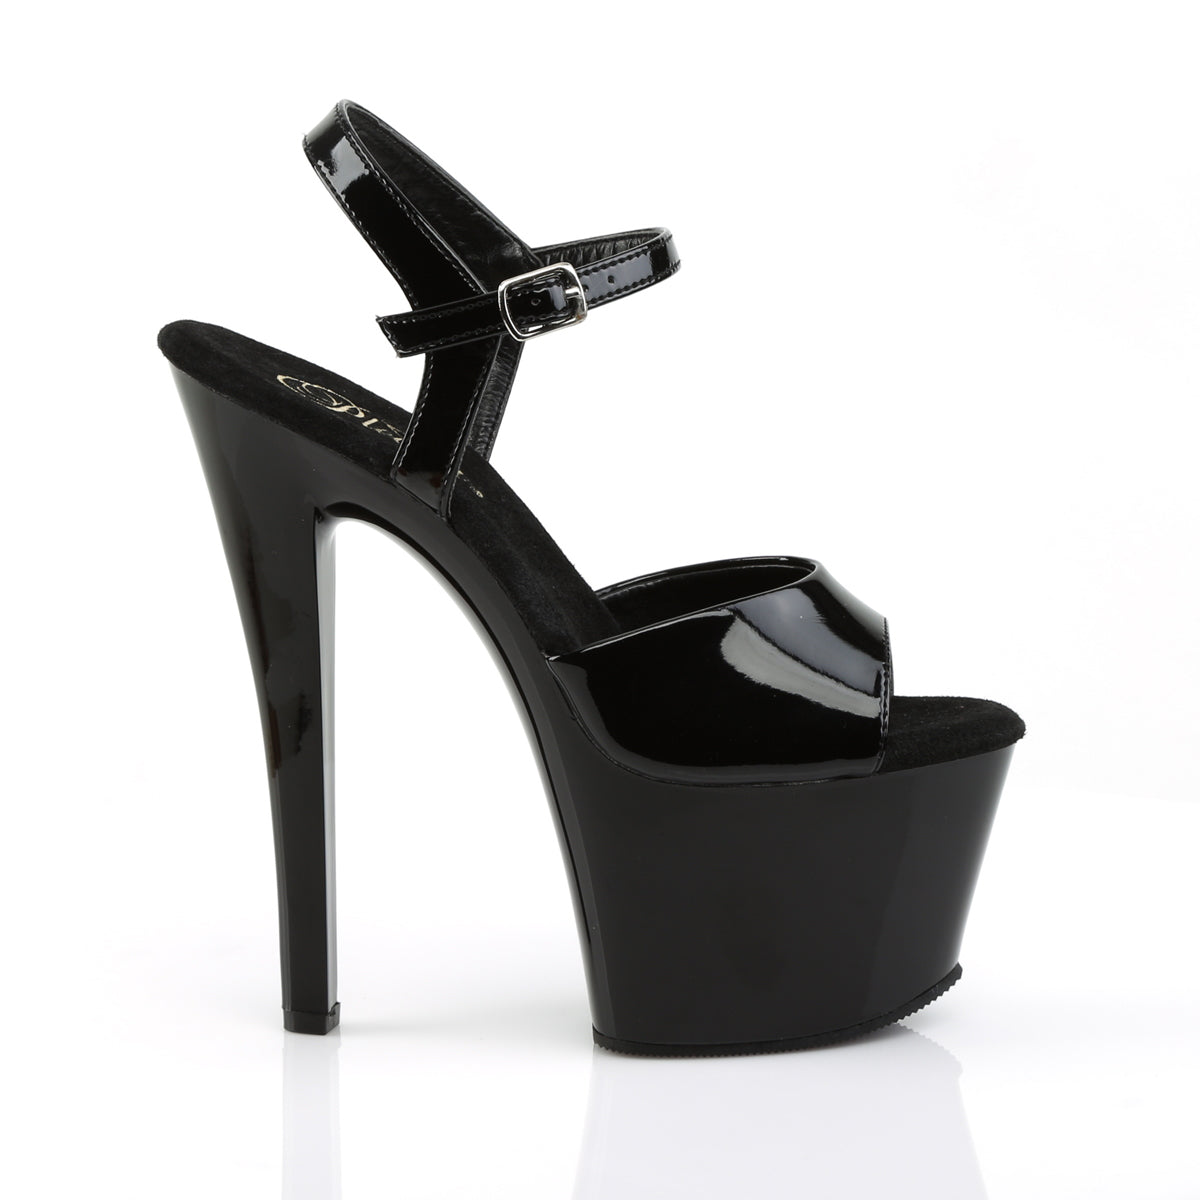 SKY-309 Pleaser 7" Heel Black Patent Pole Dancing Platforms-Pleaser- Sexy Shoes Fetish Heels